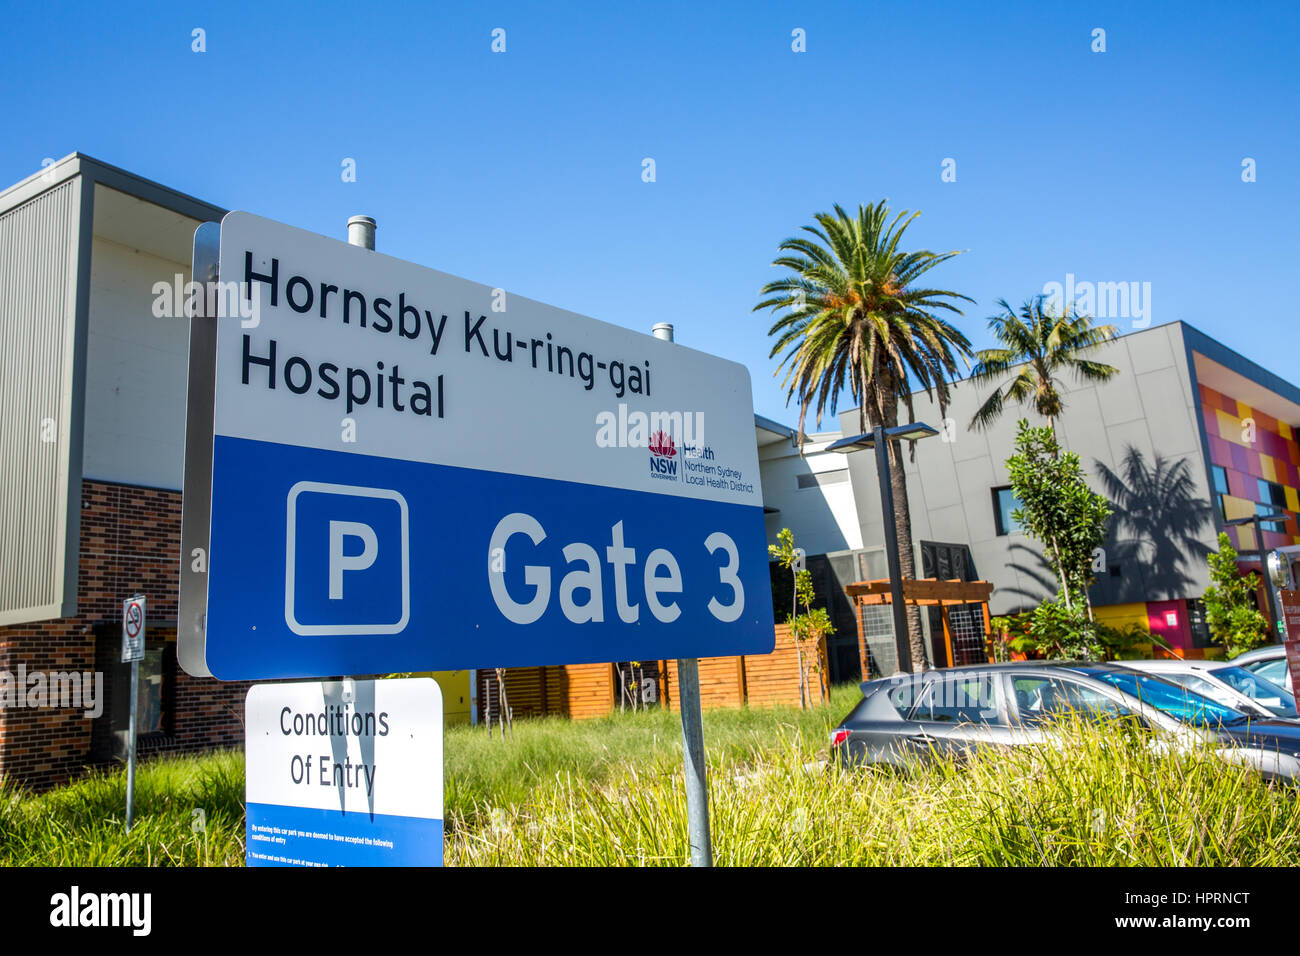 Hornsby Ku-Ring-gai hospital in Sydney, New south wales,australia Stock Photo